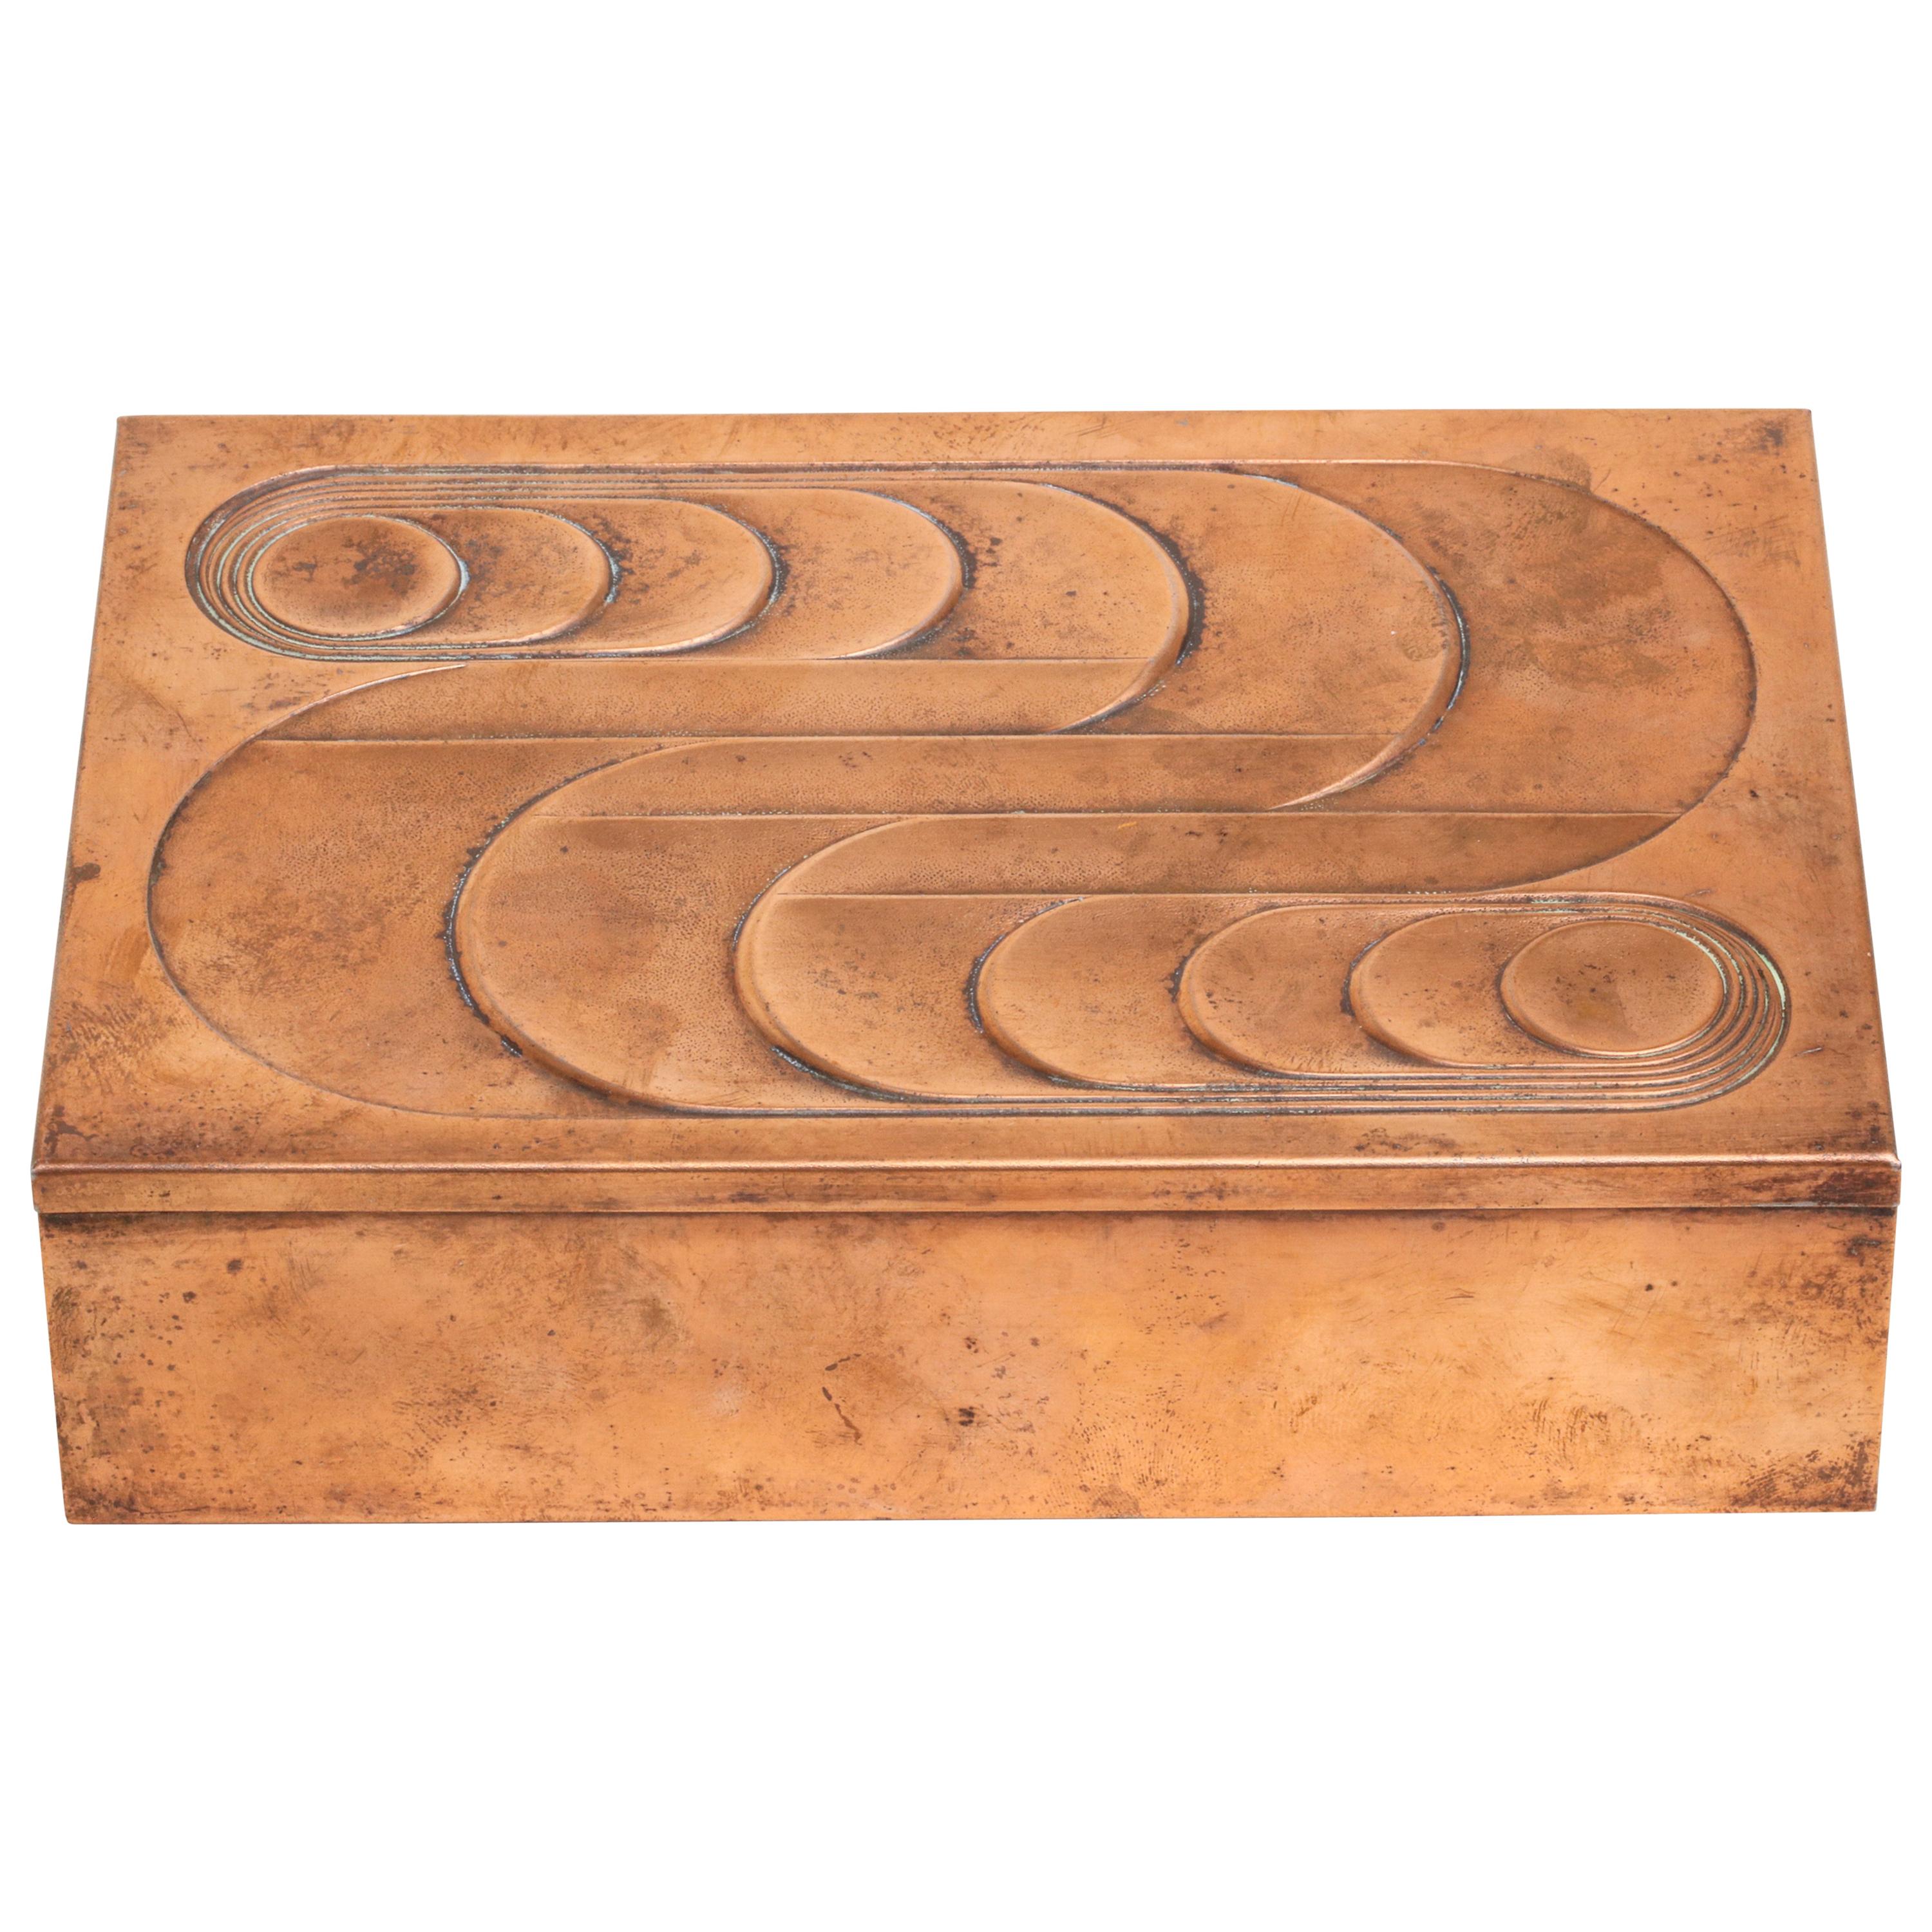 American Art Deco Hinged Copper Box with Geometric Design